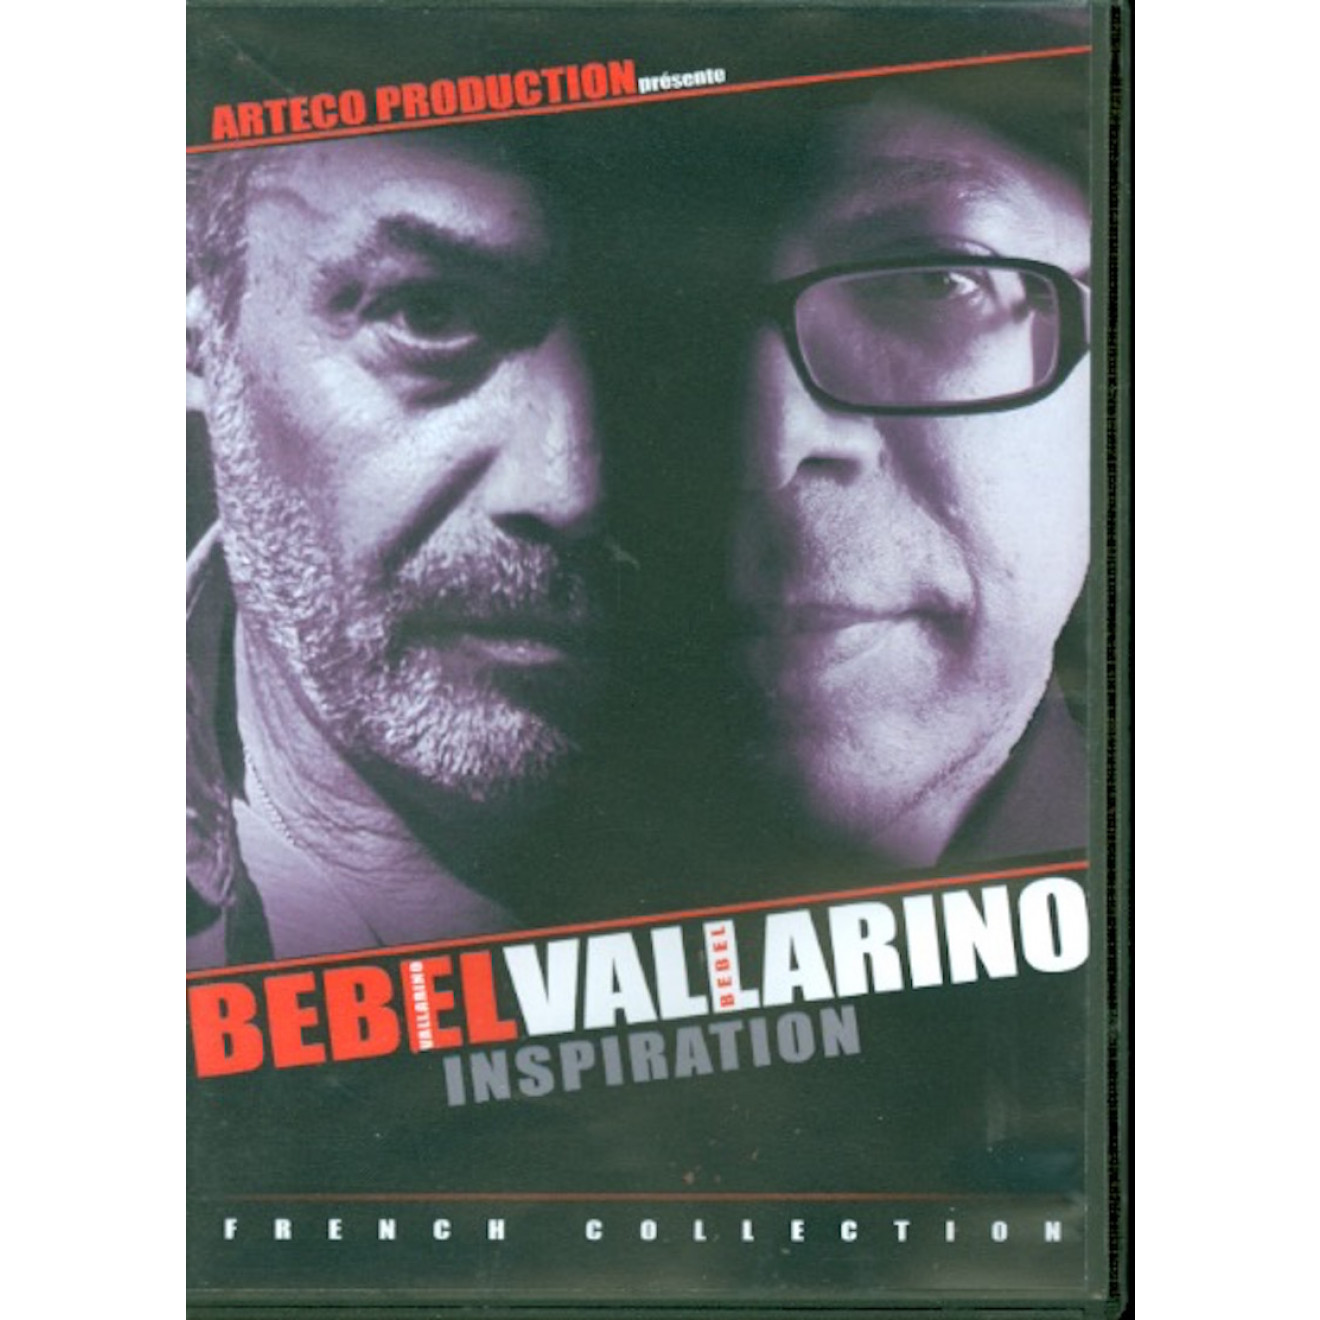 Bebel Vallarino Inspiration (DVD)